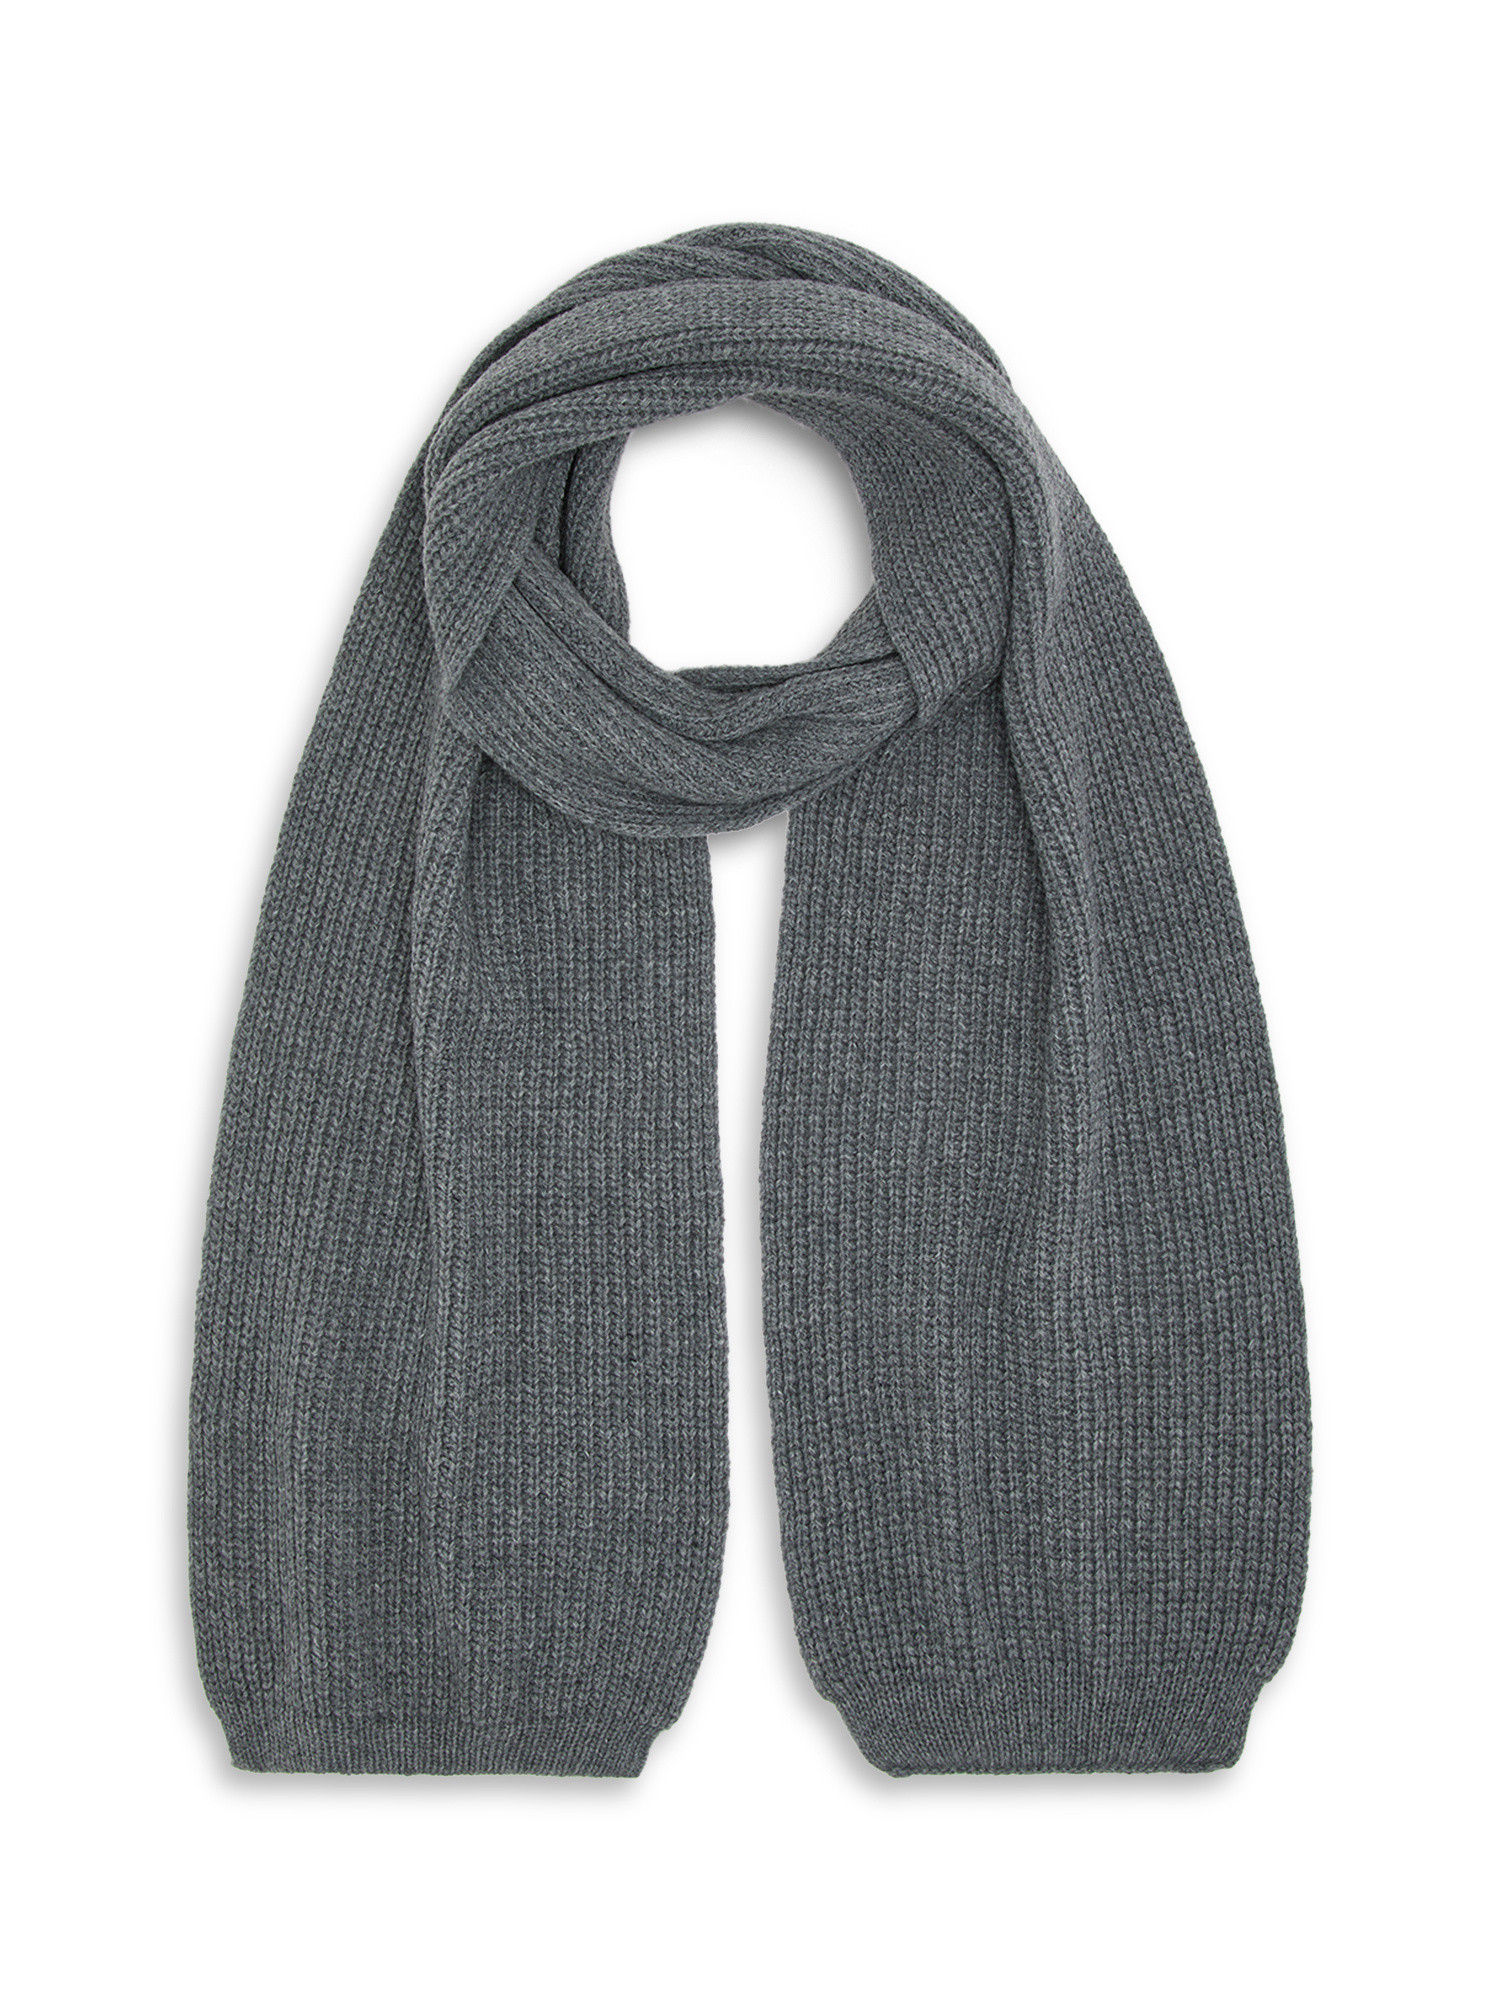 Luca D'Altieri - English rib stitch scarf, Grey, large image number 0